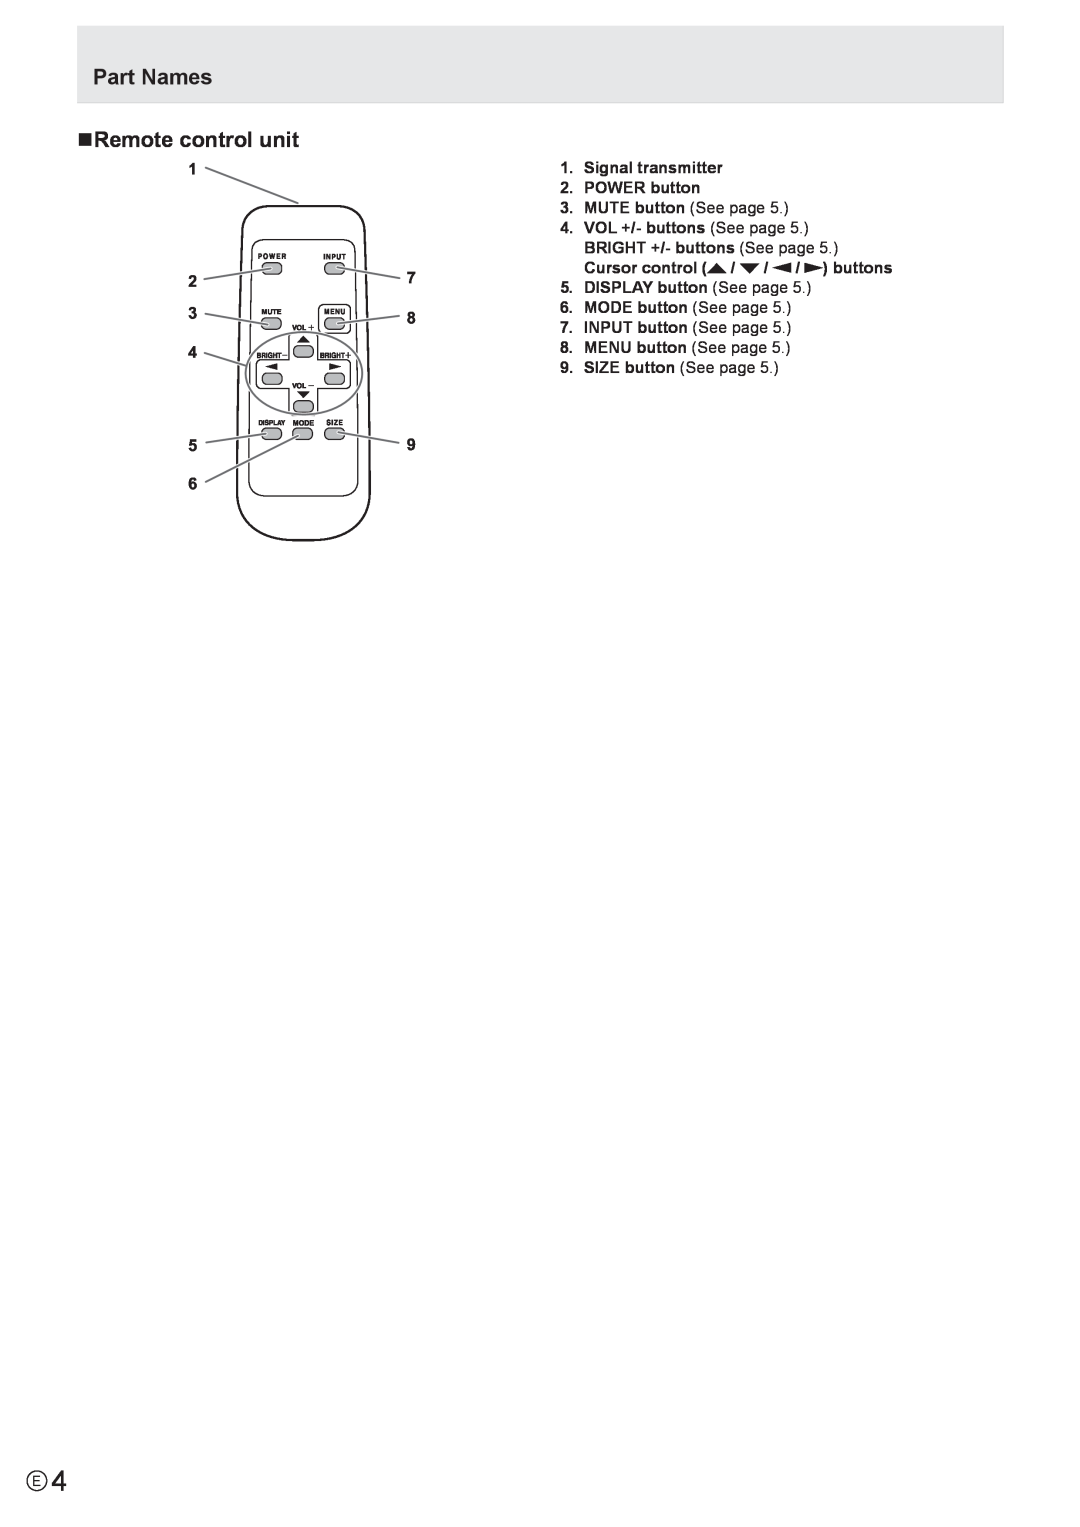 Sharp PN-E601, PN-E521 manual Part Names nRemote control unit, Signal transmitter 2. POWER button, INPUT button See page 